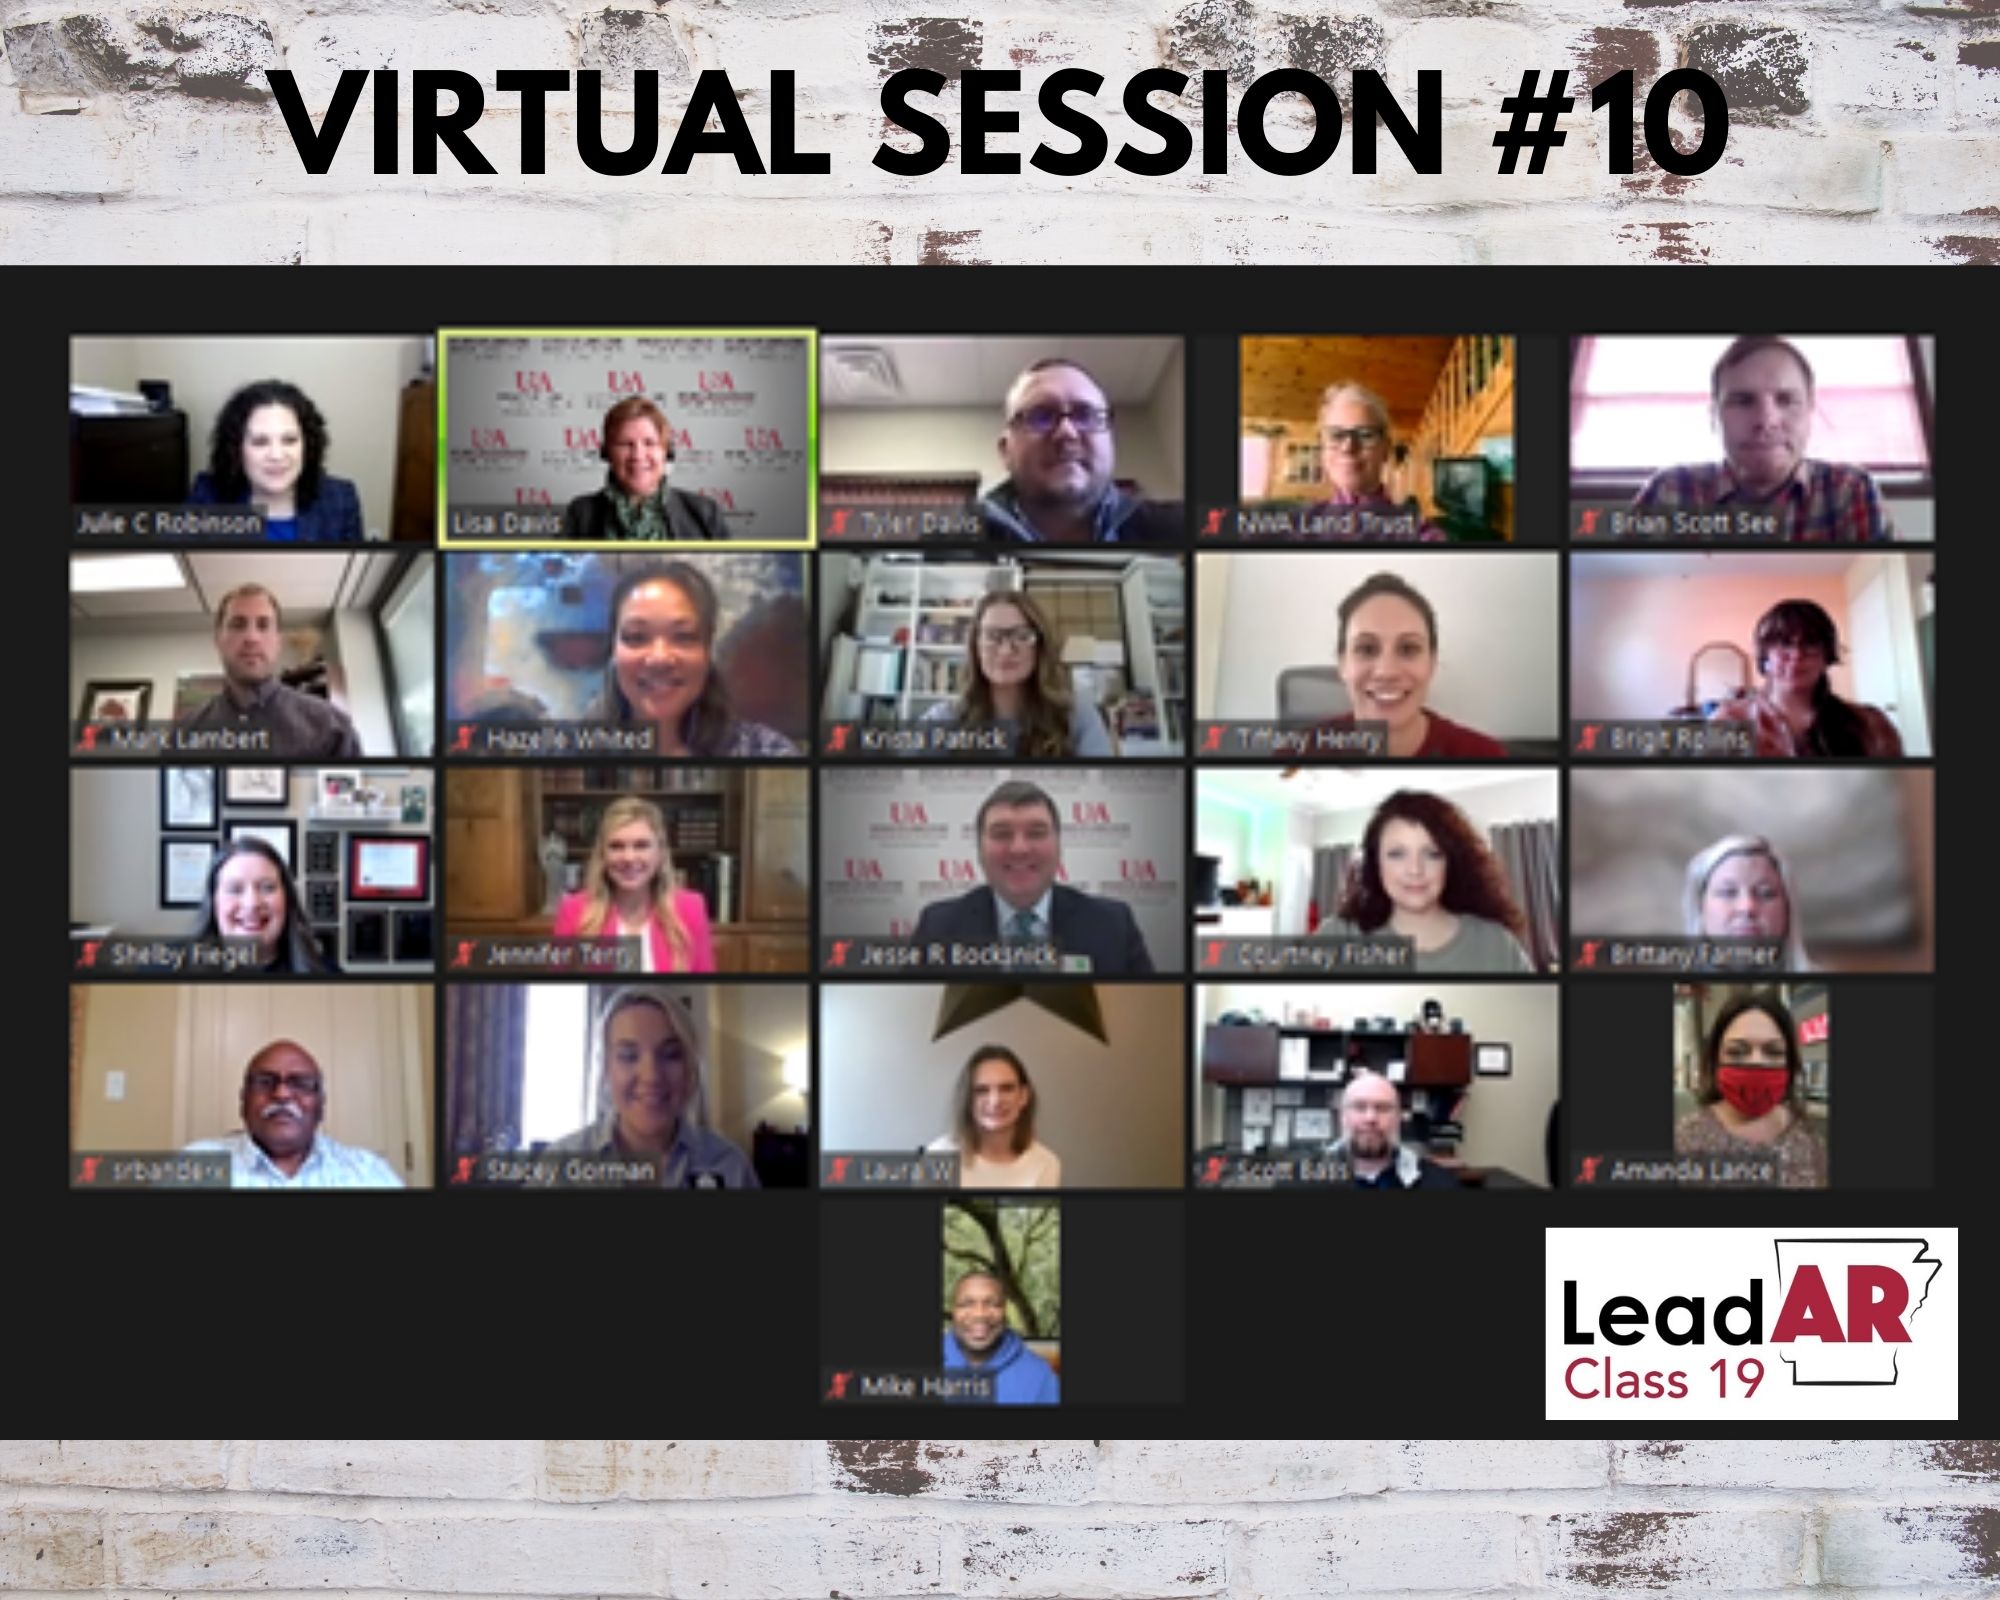 Screenshot of LeadAR Class 19 virtual session 